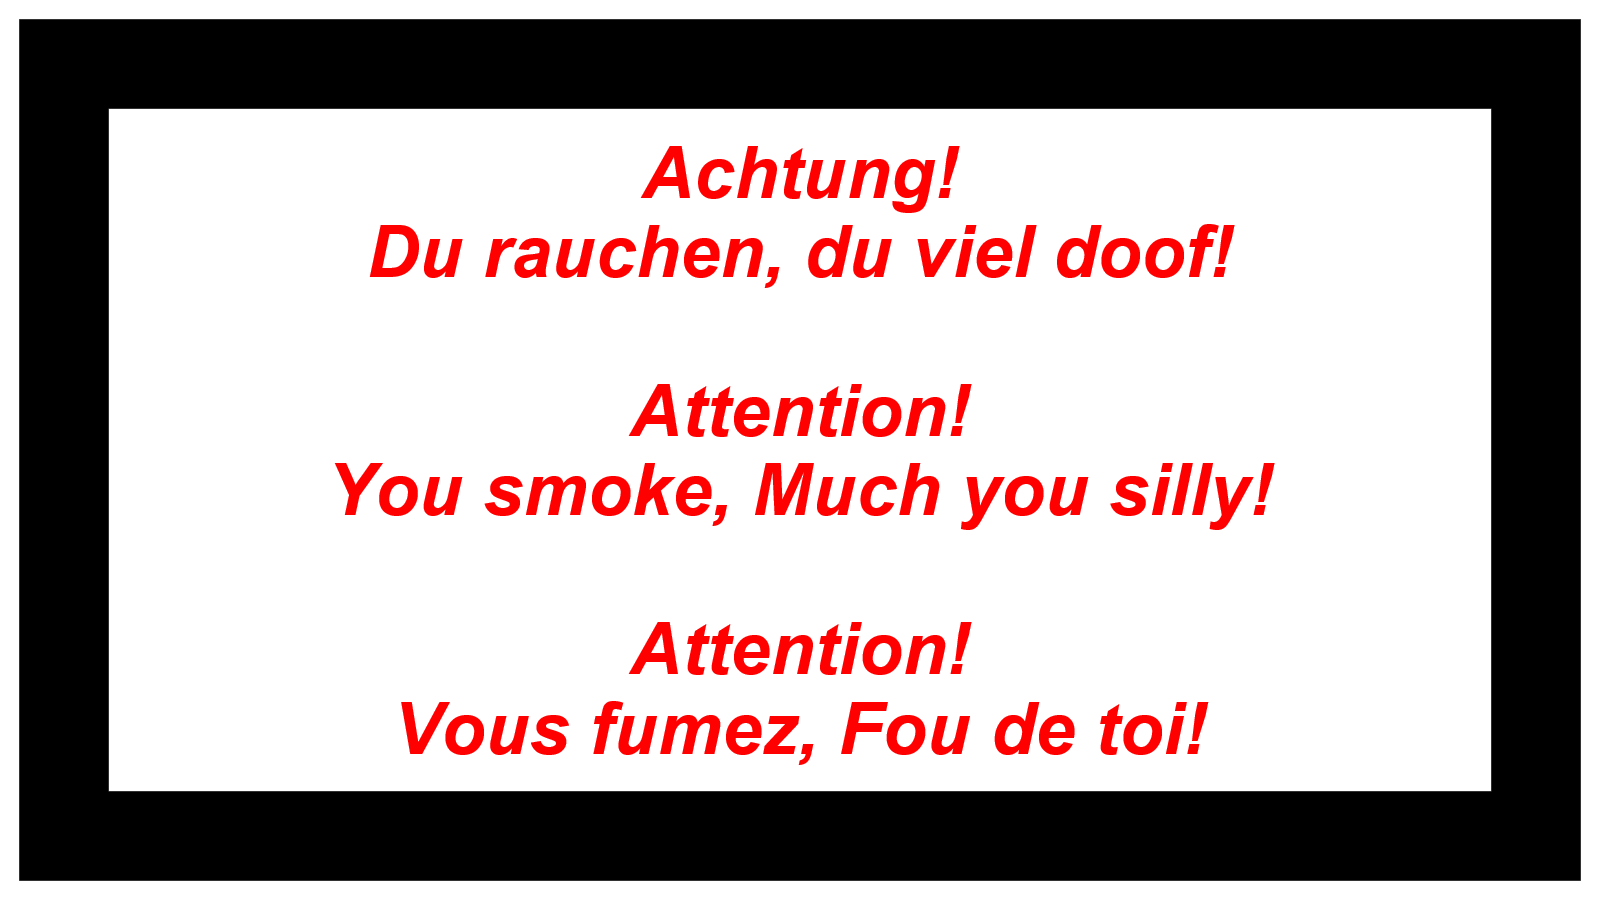 Achtung!  Du rauchen, du viel doof!  Attention!  You smoke, Much you silly!  Attention!  Vous fumez, Fou de toi!